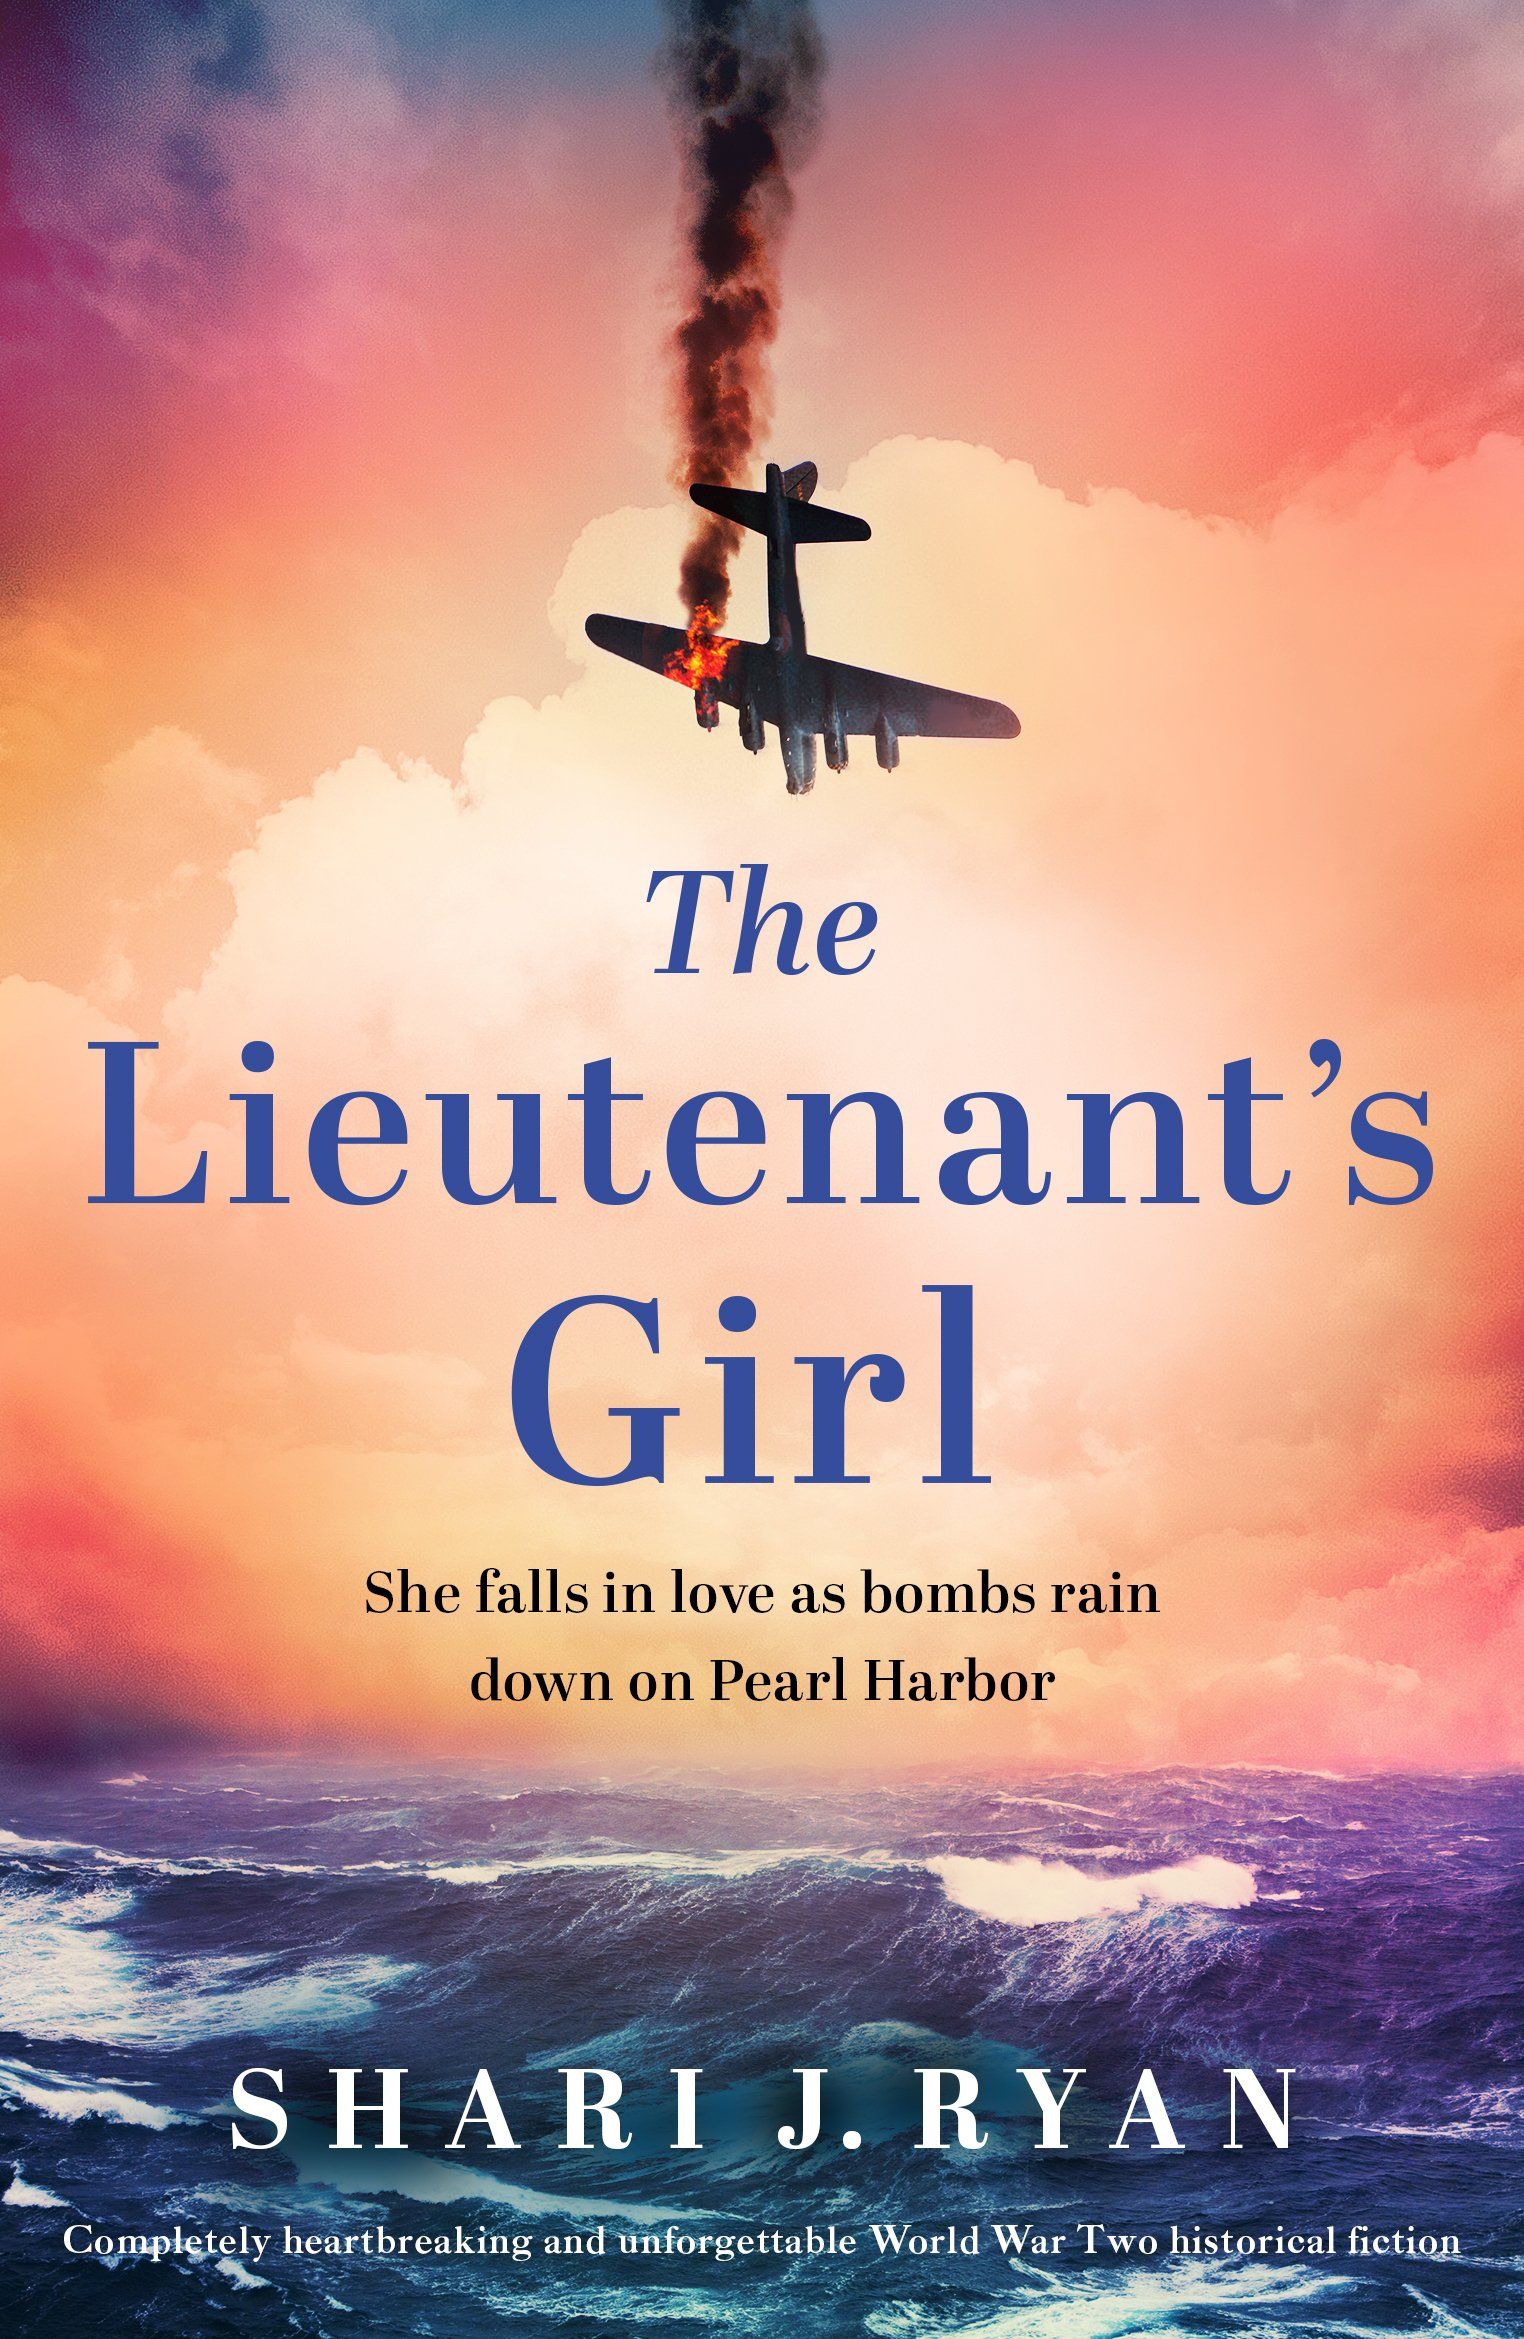 The Lieutenant's Girl by Shari J. Ryan